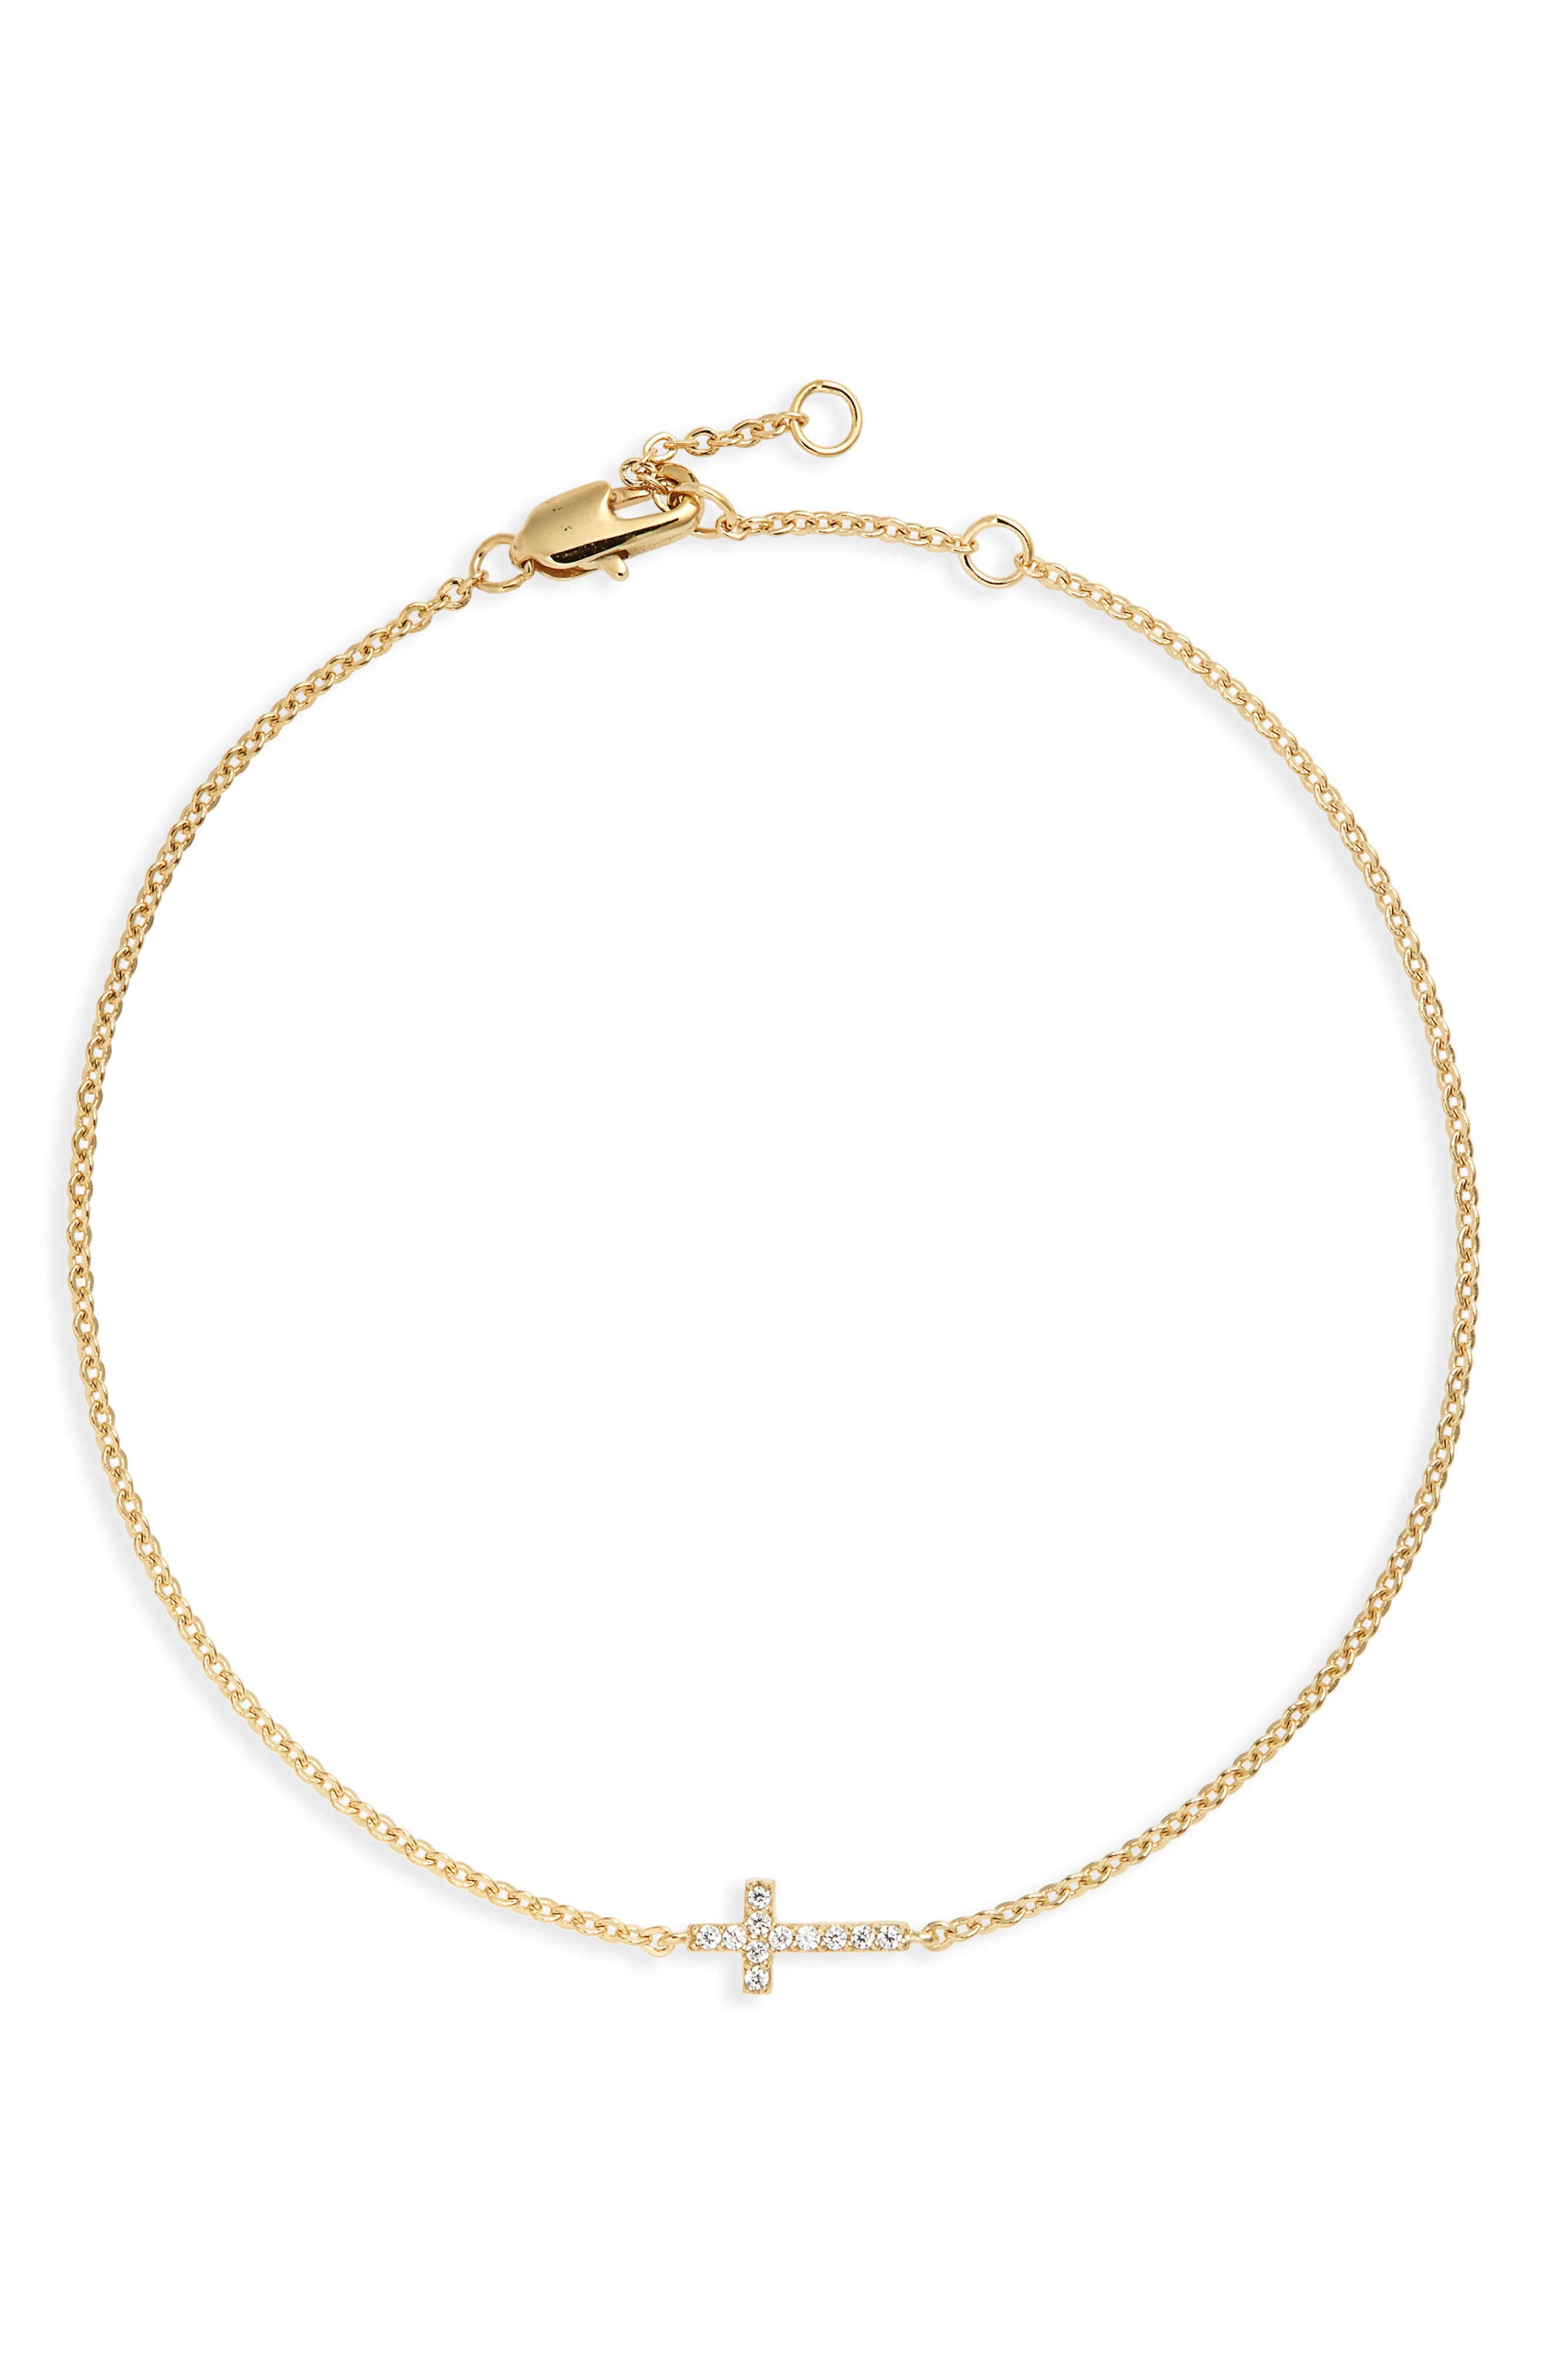 Natural stone bracelets for women gold chain bracelet mama bracelet upcycled jewelry